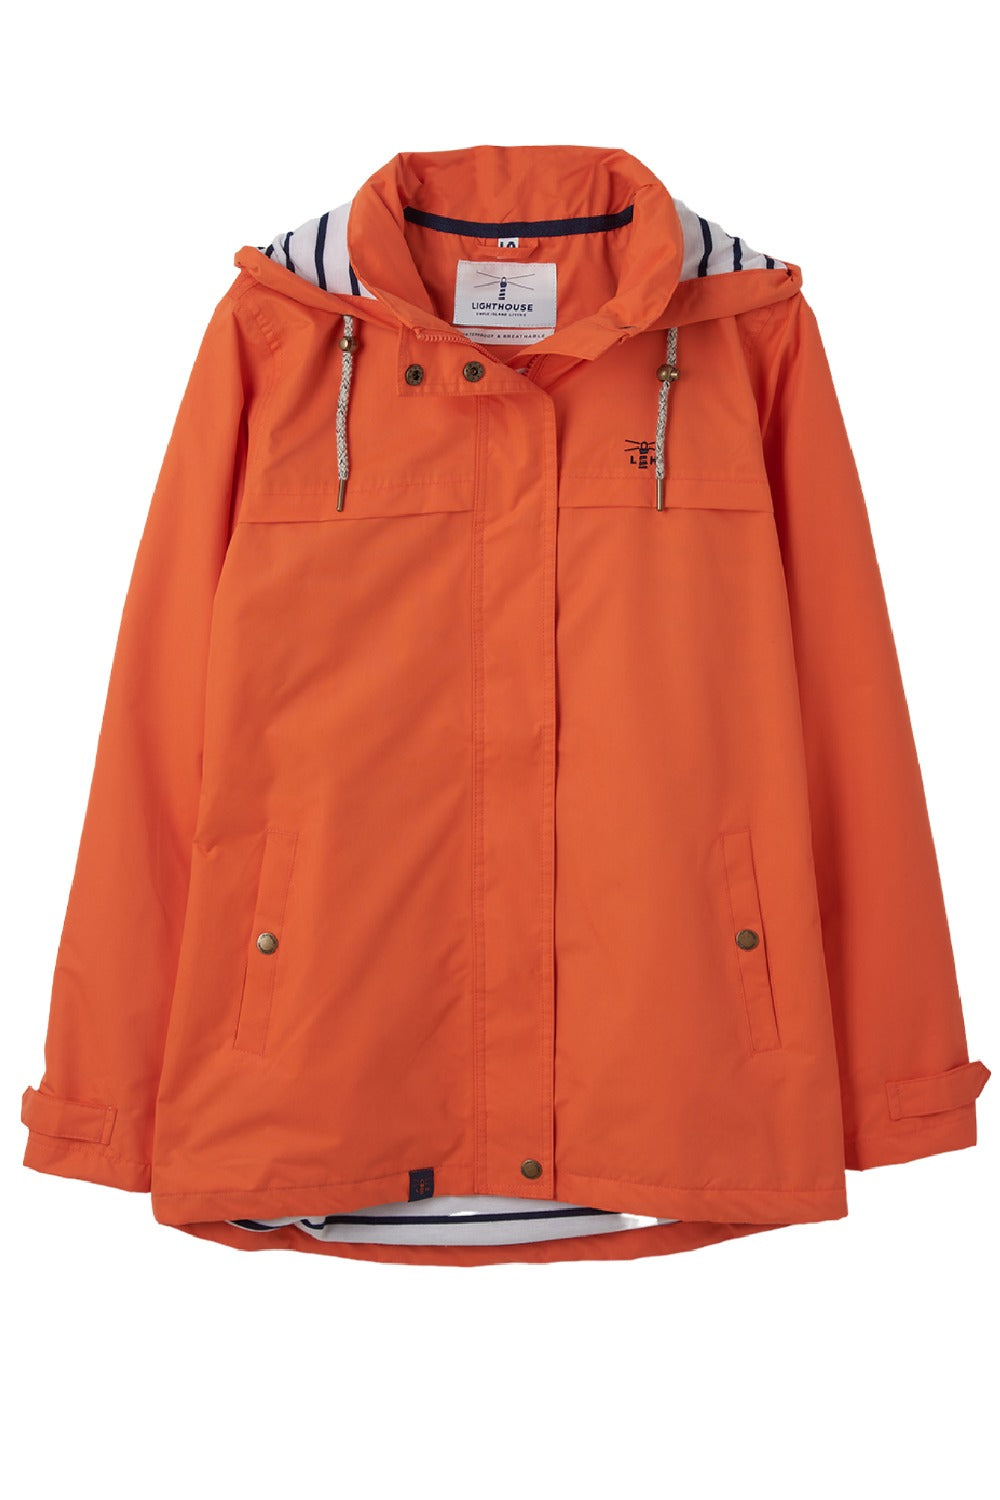 Lighthouse Beachcomber Womens Waterproof Jacket in Orange 